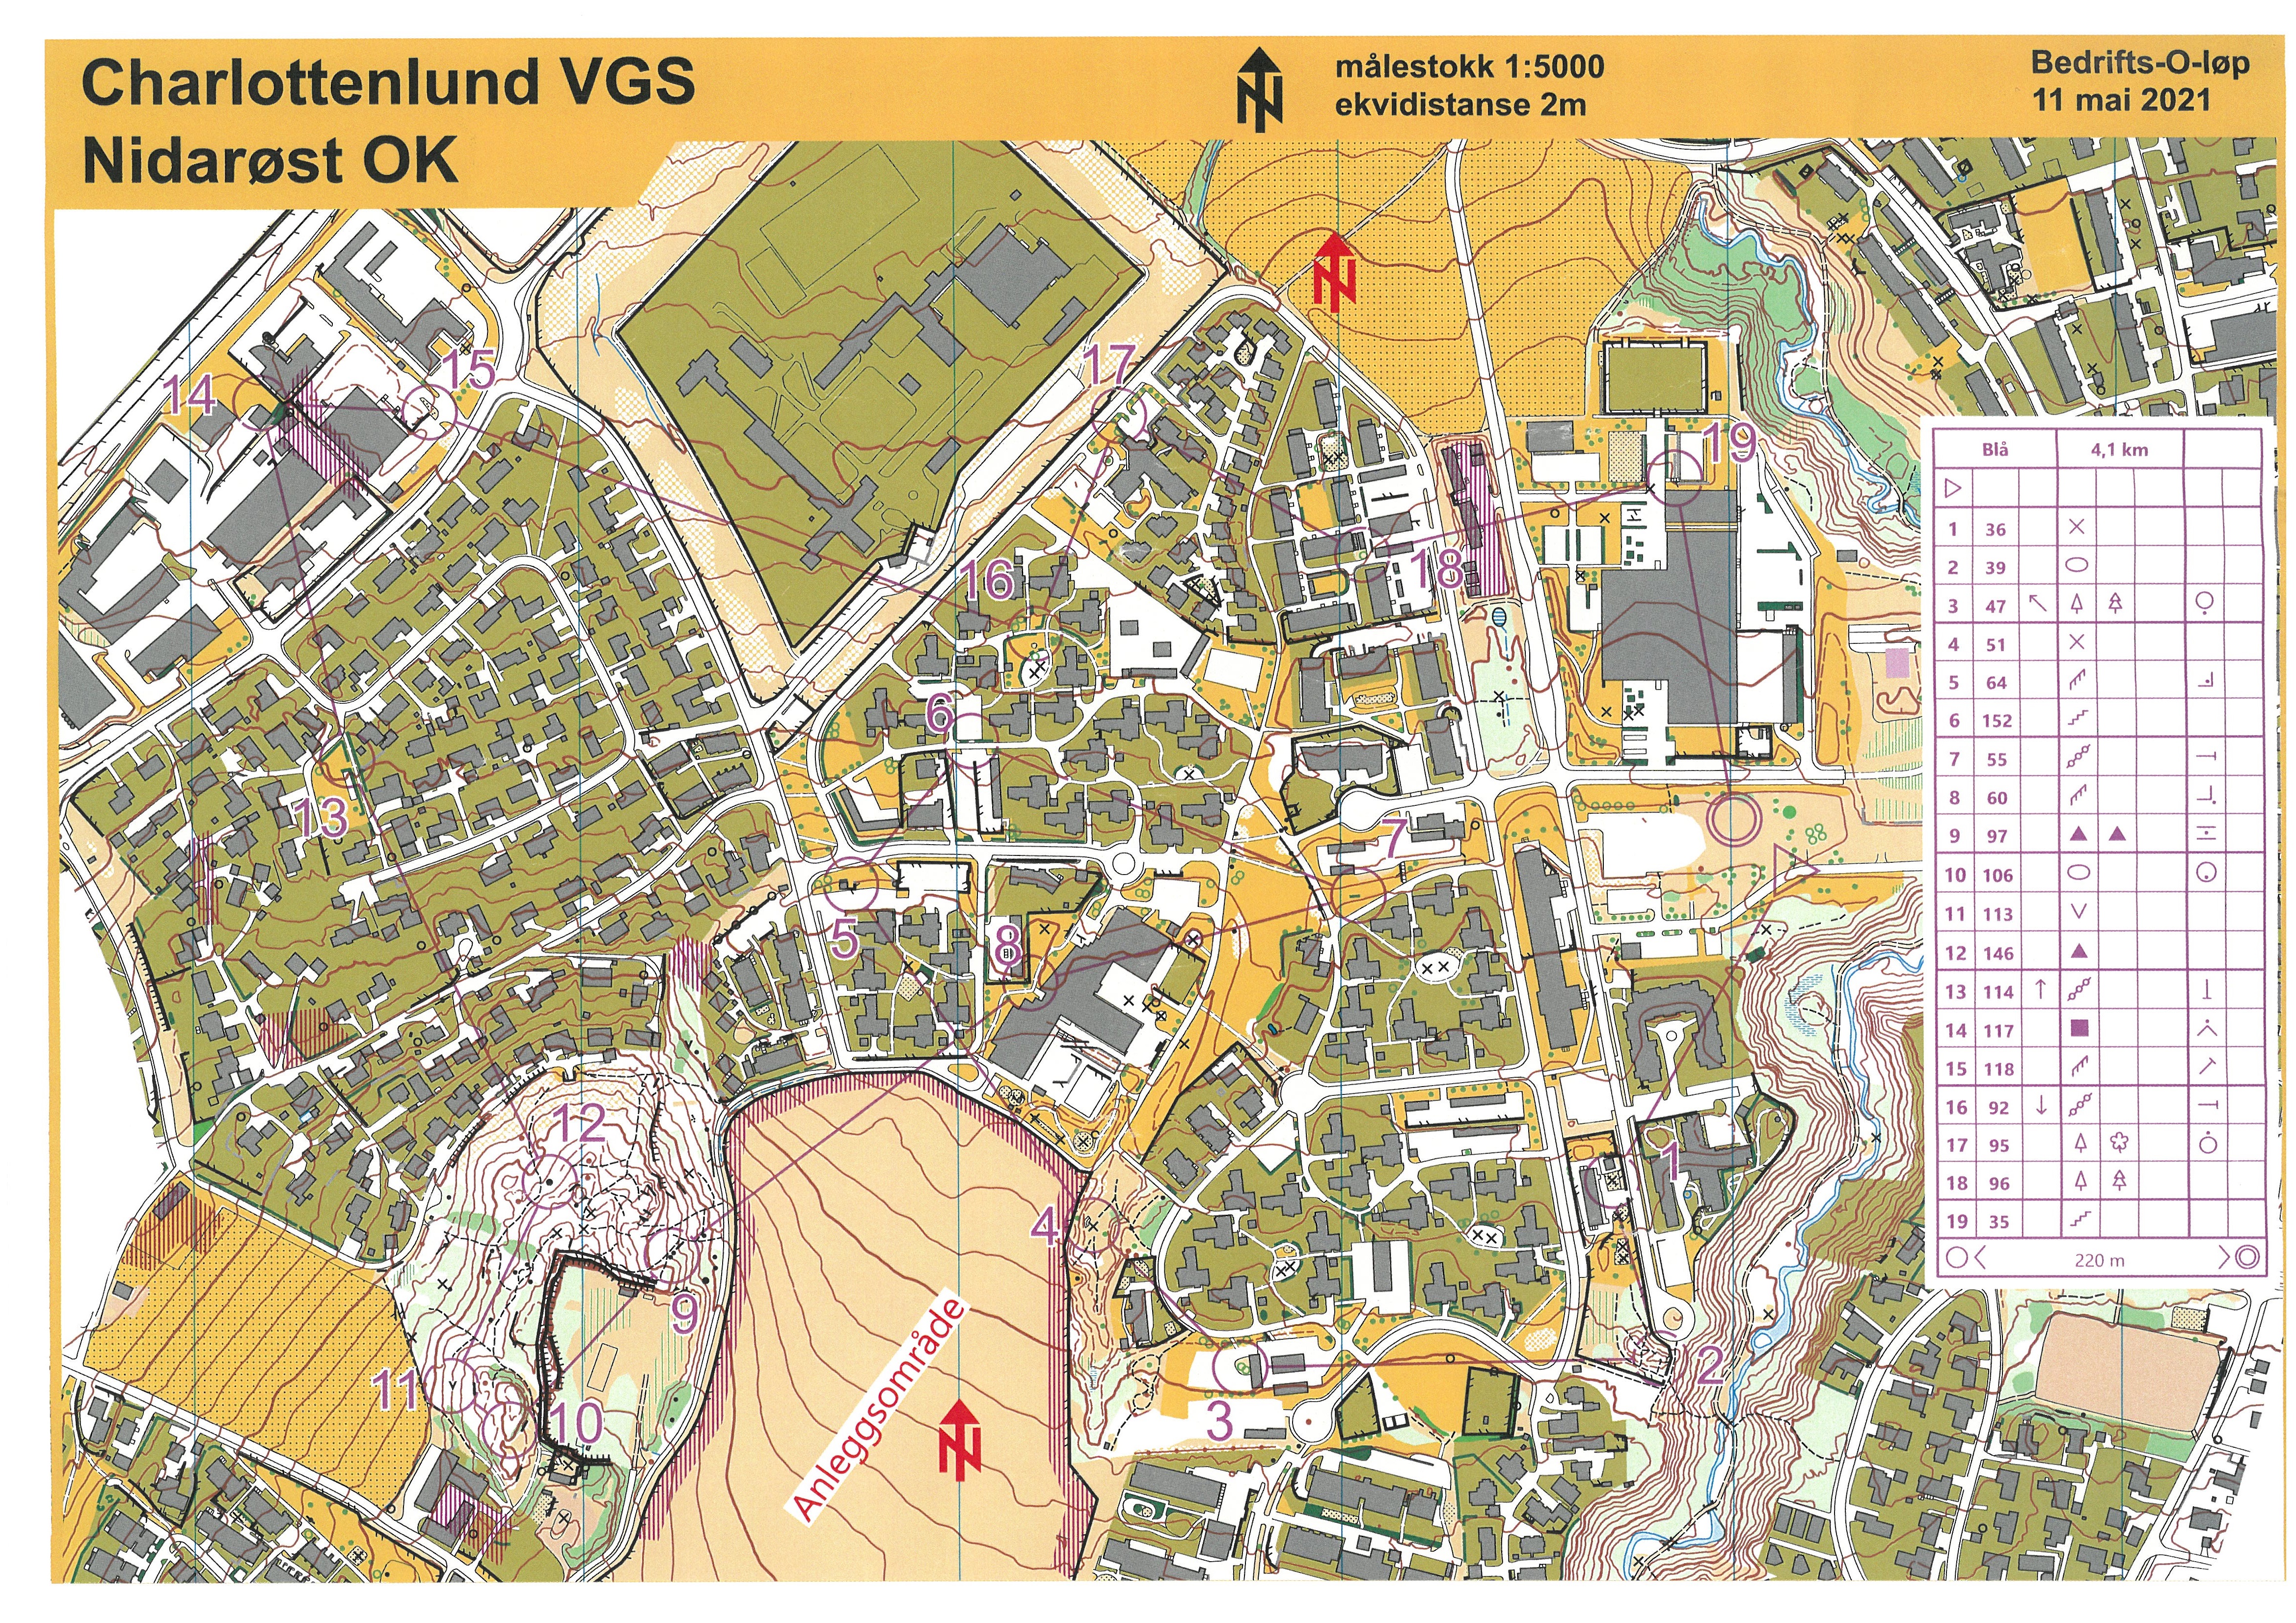 Bedrifts o-løp 1 - Charlottenlund (2021-05-11)